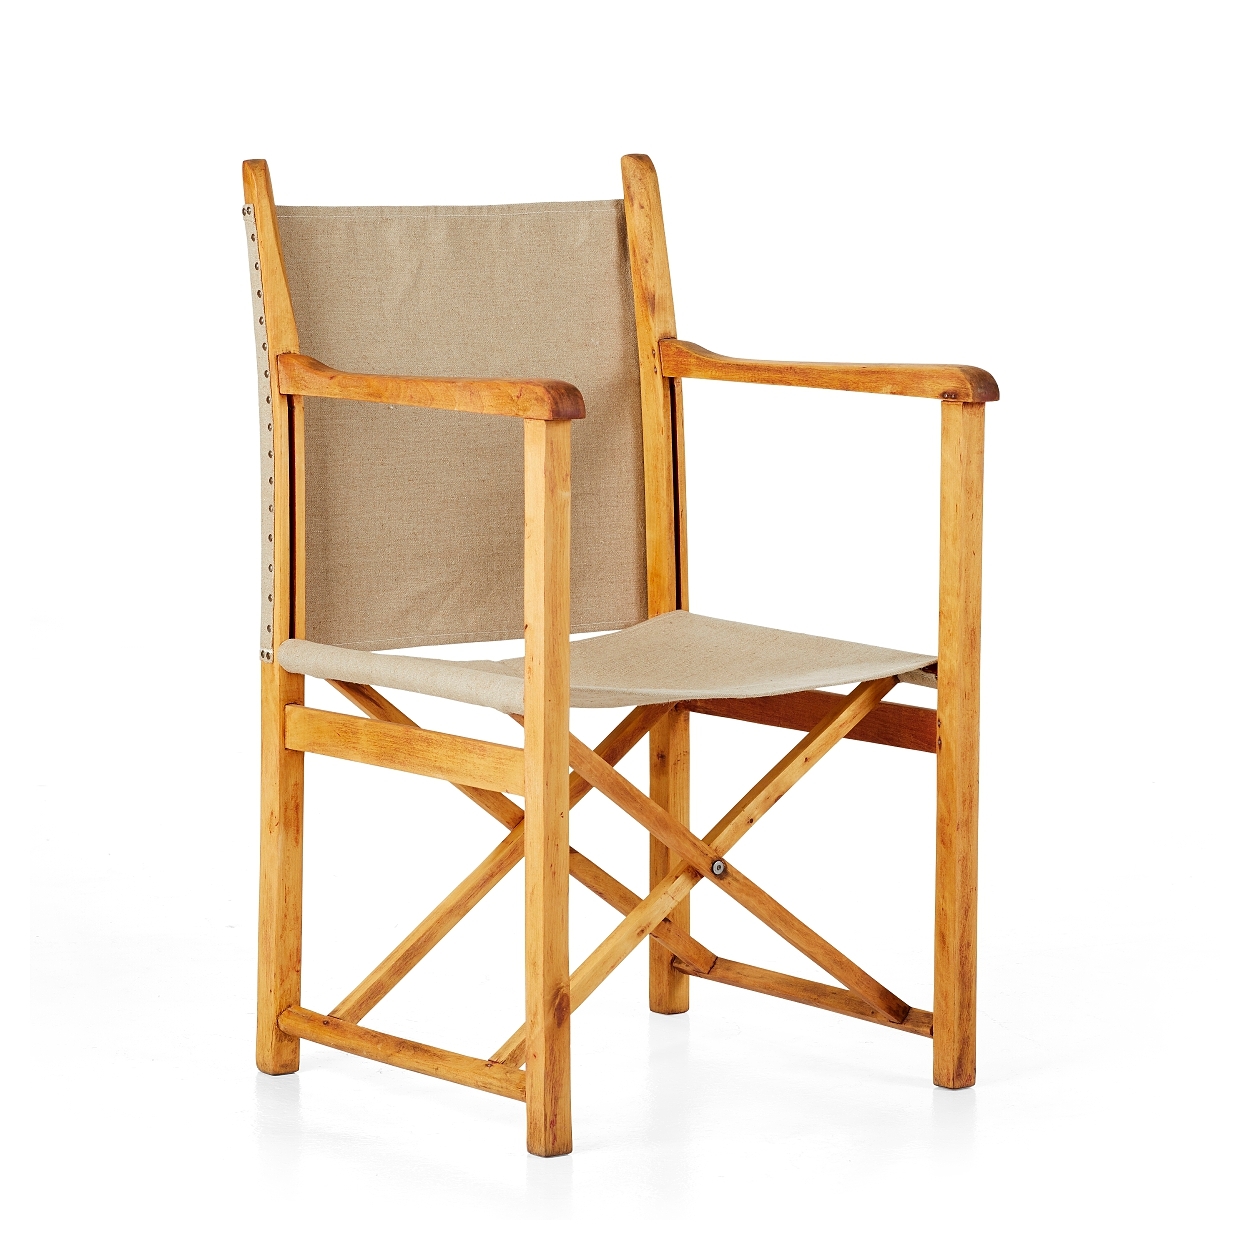 Hannes Meyer | A Hannes Meyer folding chair (1926) | MutualArt